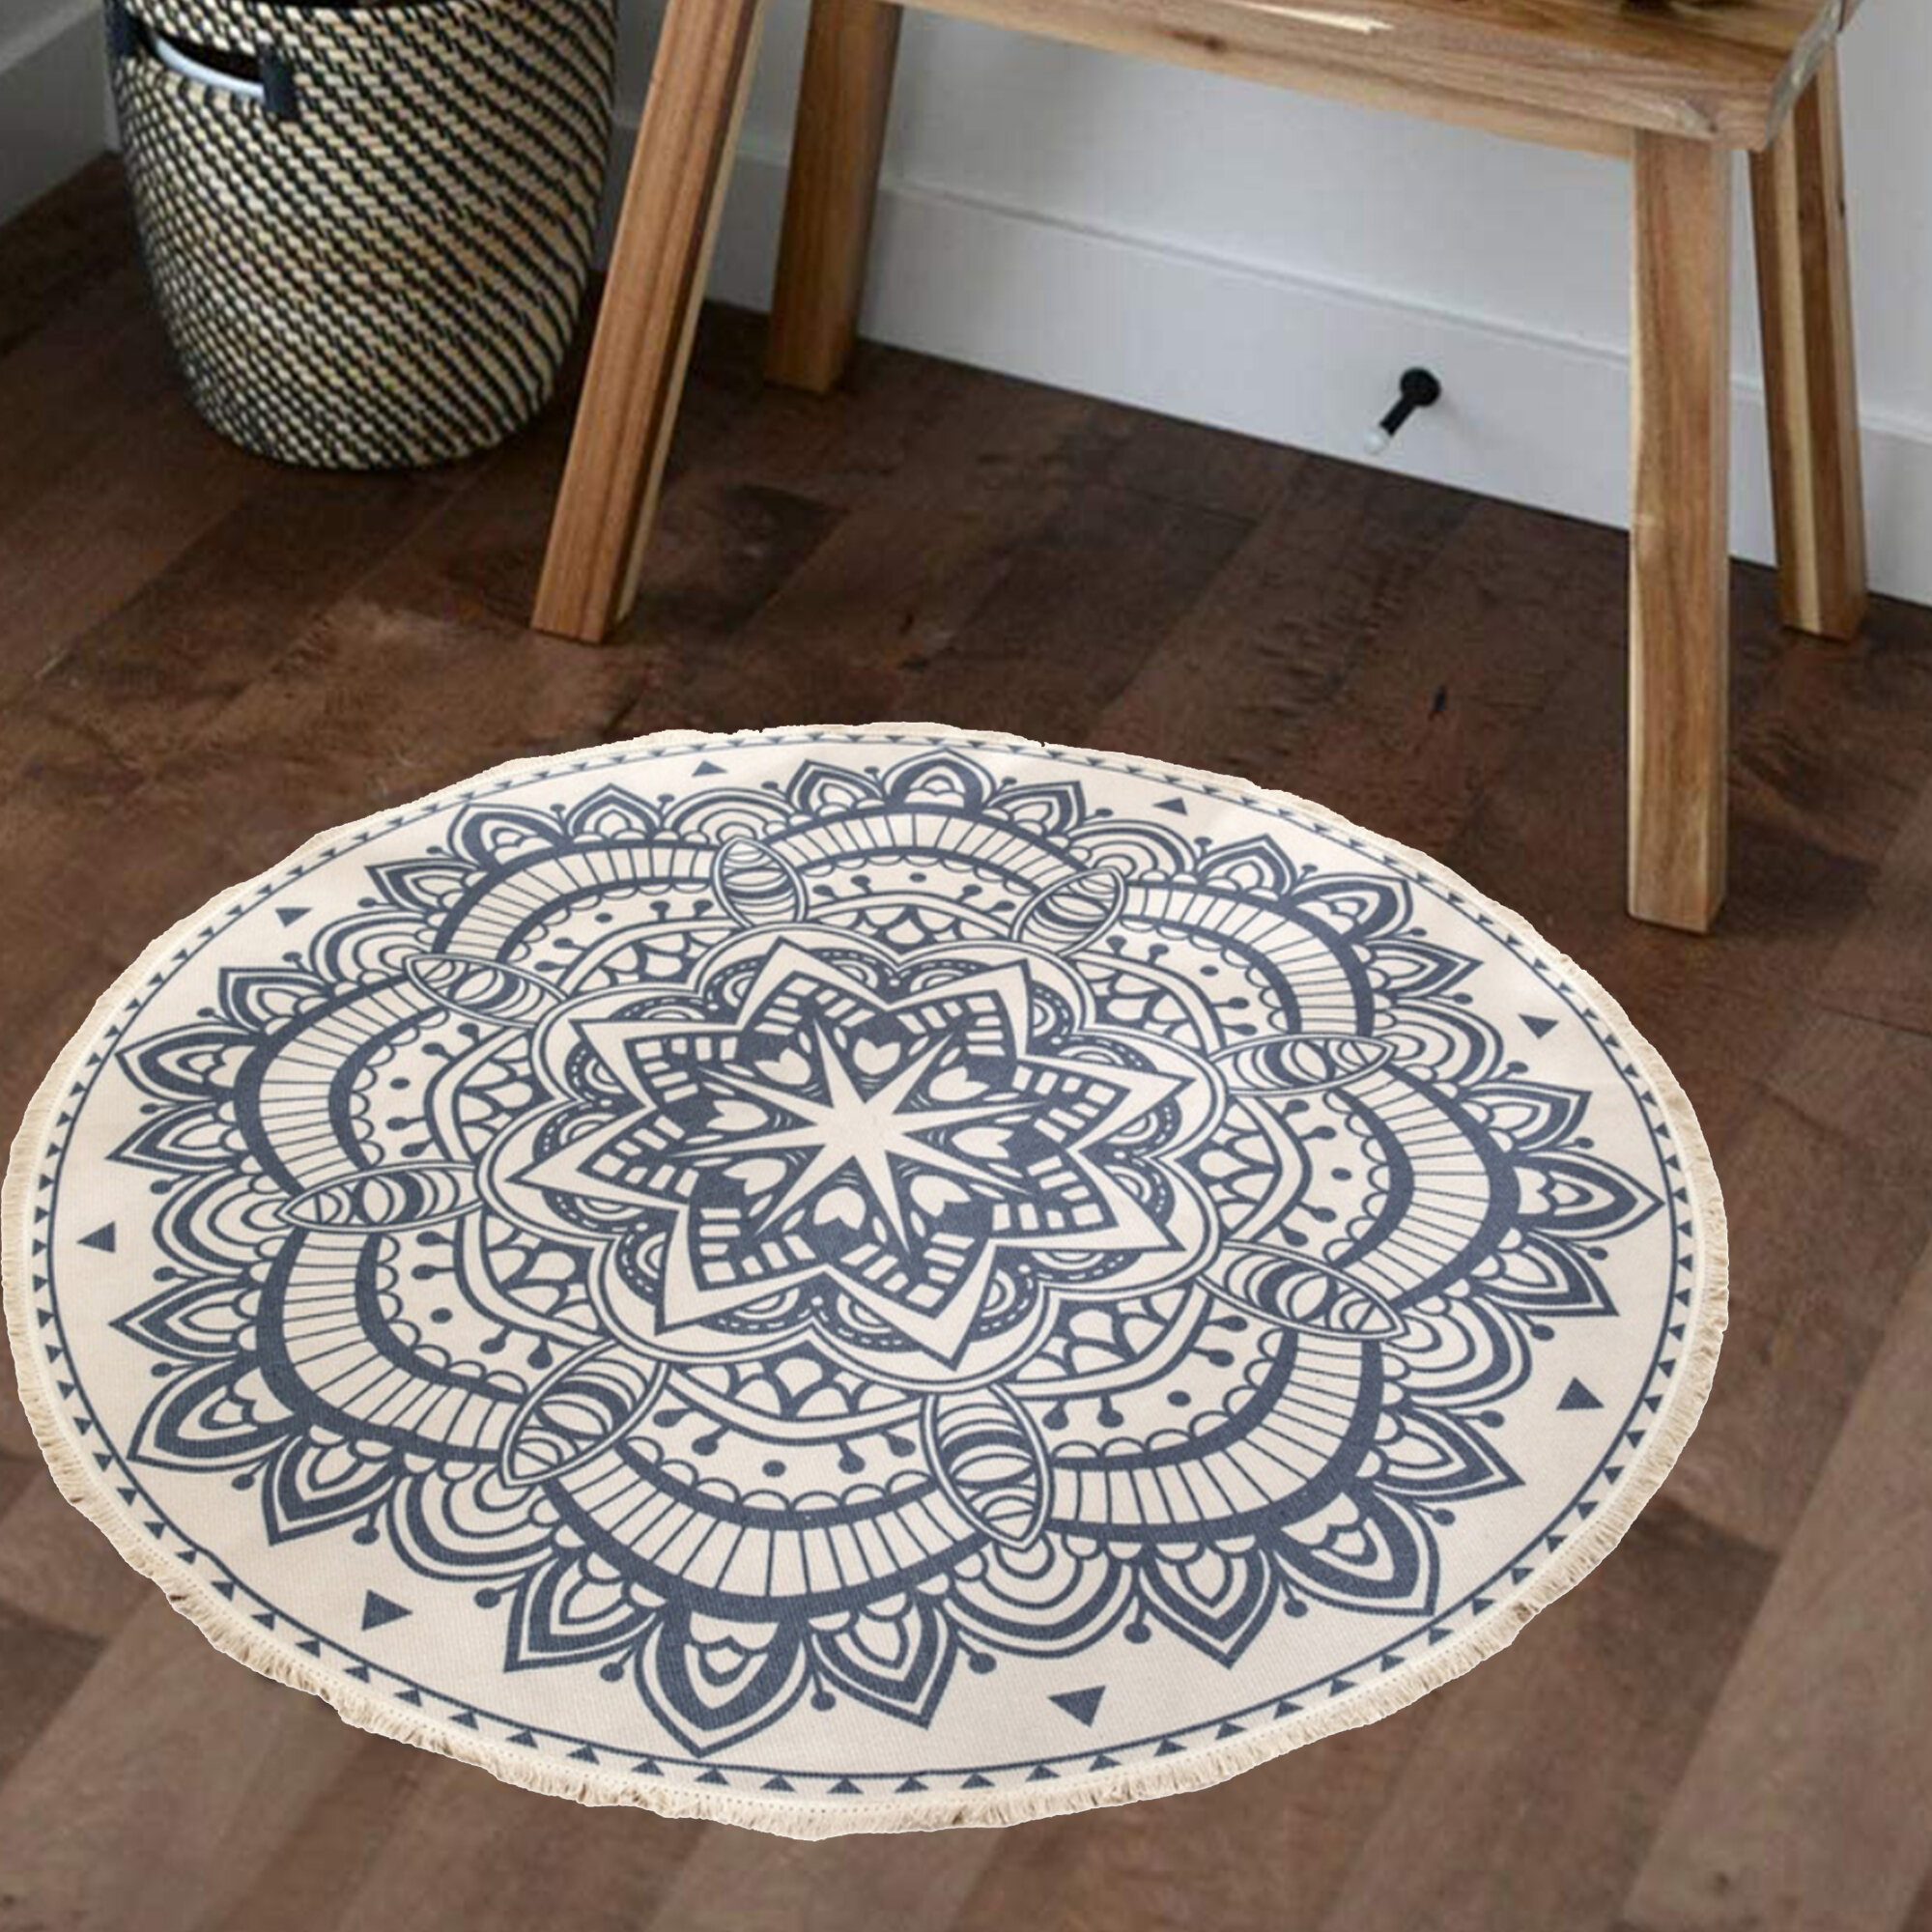 Round Carpet Hand-Woven Cotton and Linen Home Carpet Color : C, Size : Round Diameter 90cm